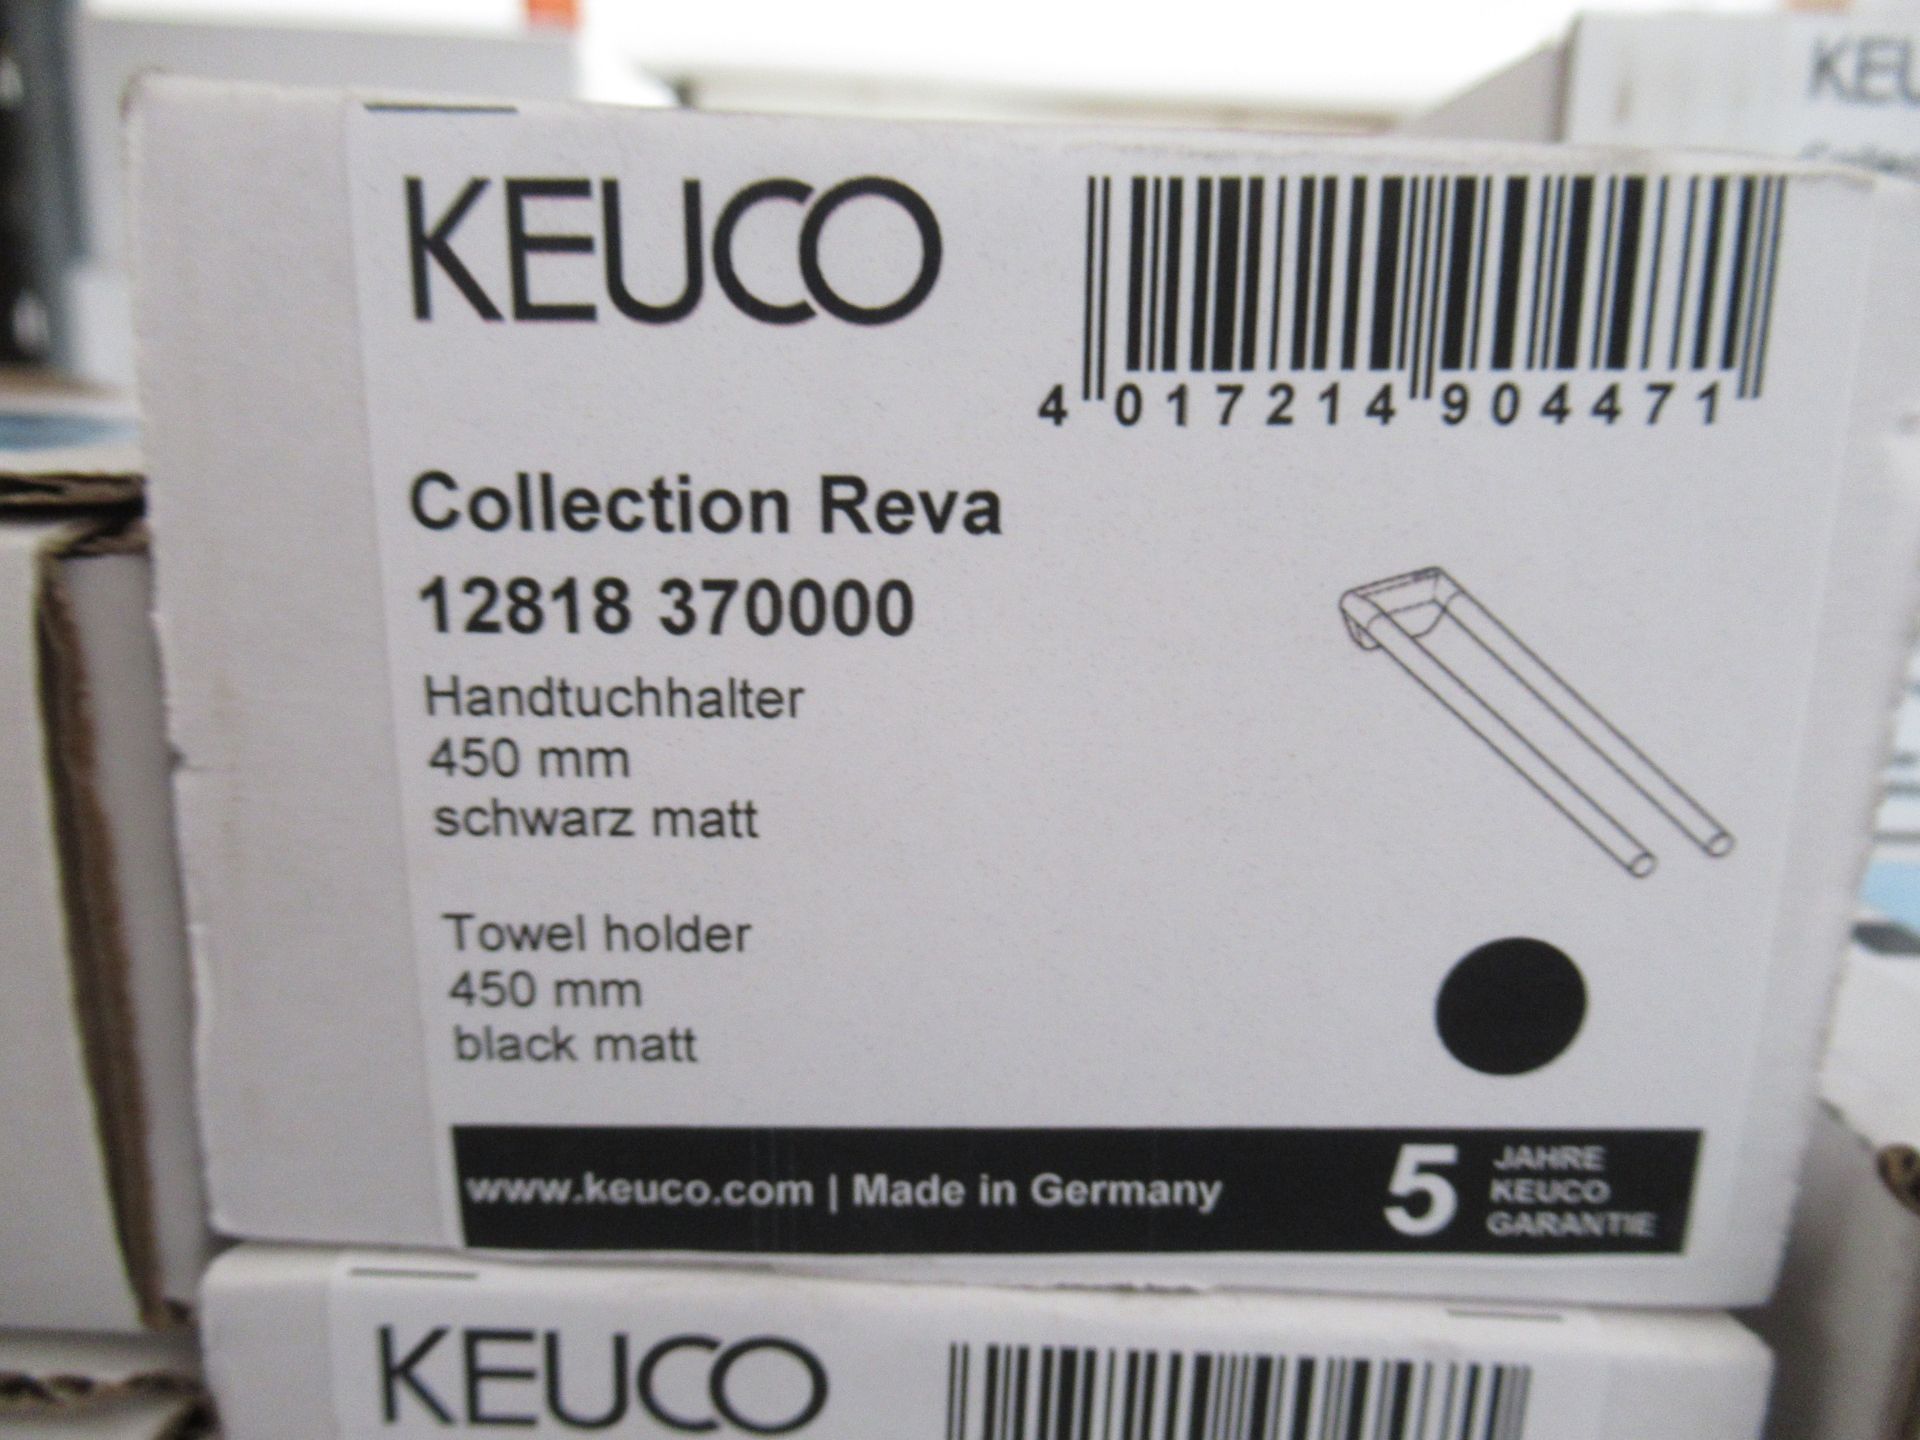 2 x Keuco Collection Reva Towel Holder Black Matt, P/N 12818-370000 - Image 2 of 2